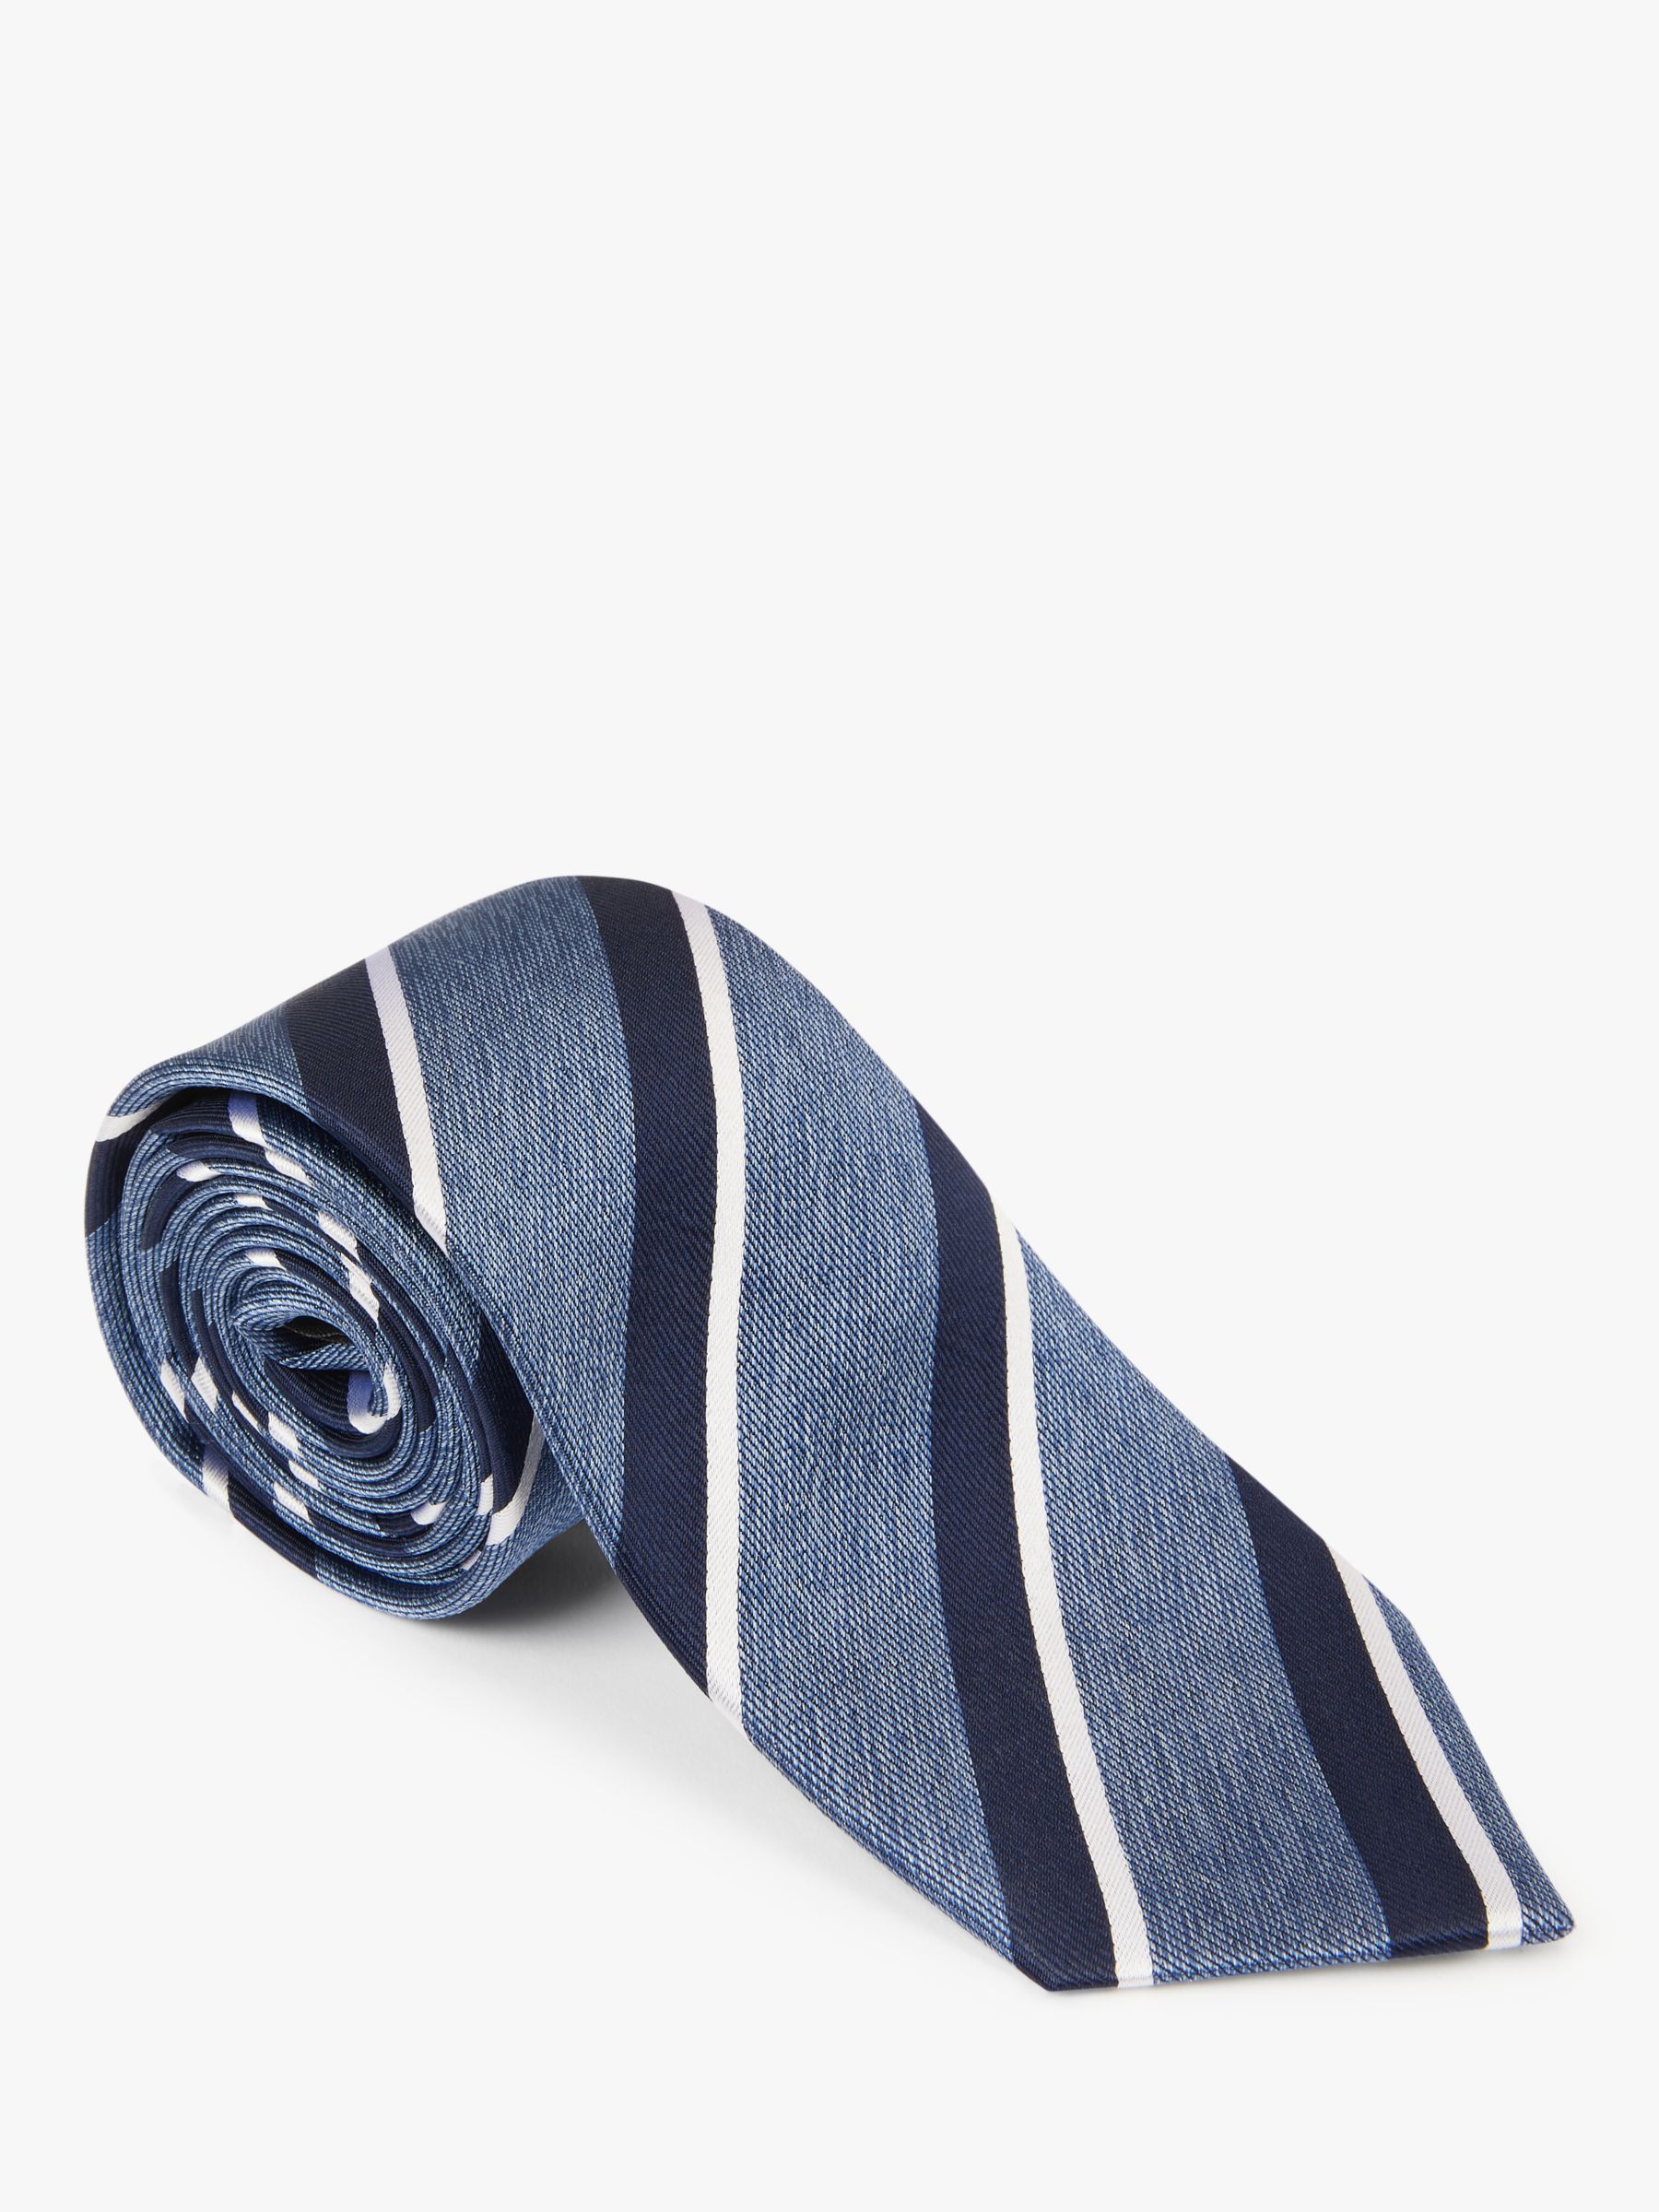 John Lewis & Partners Stripe Silk Tie, Blue at John Lewis & Partners